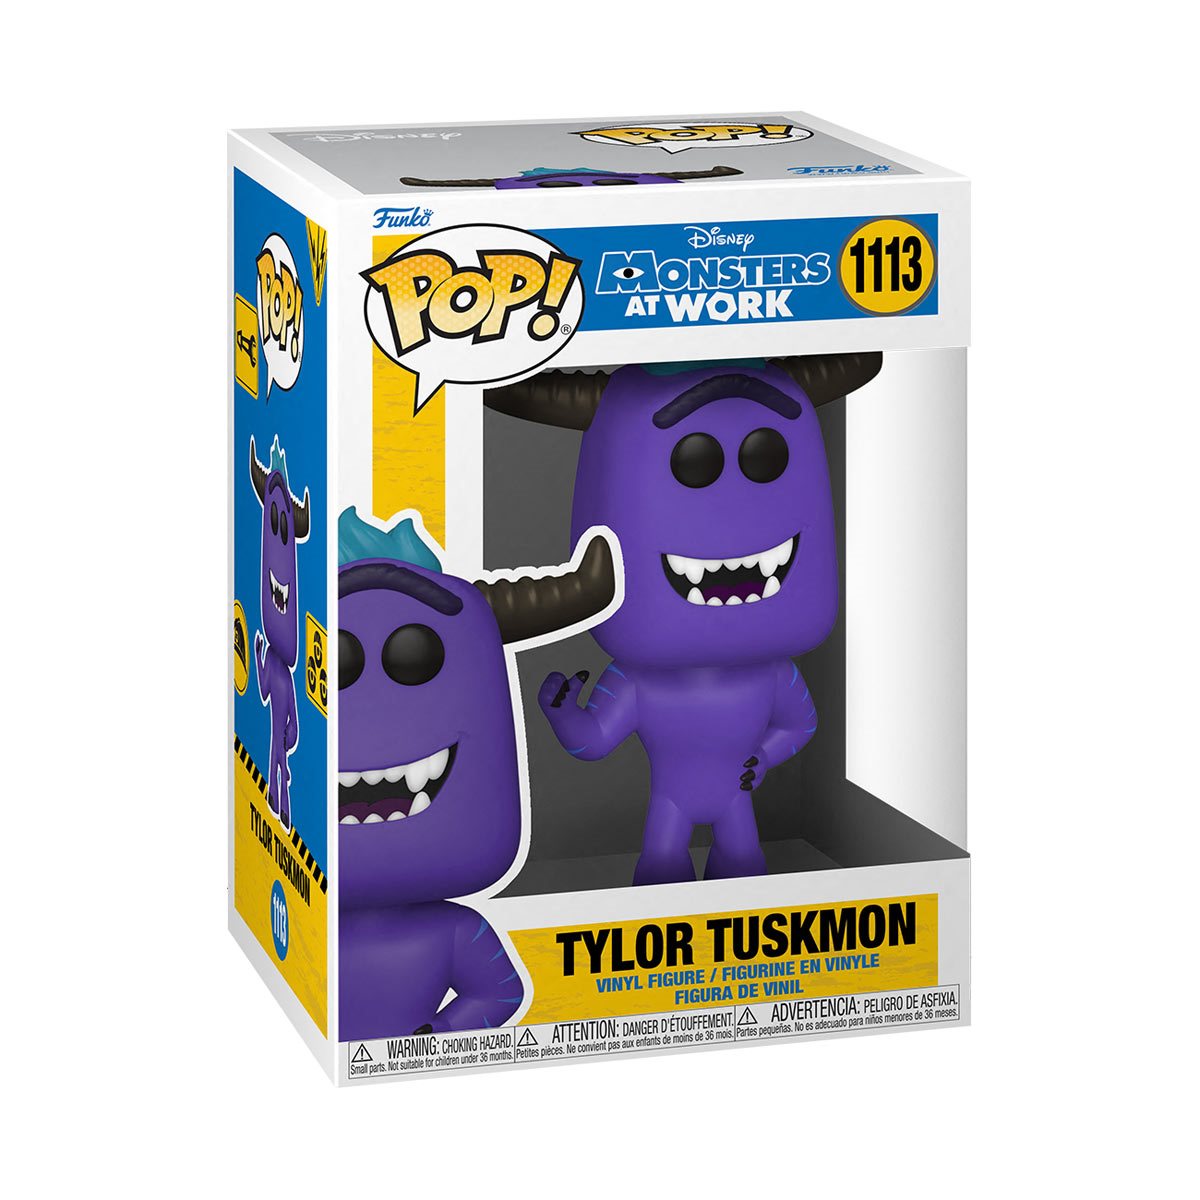 Disney: Monsters at Work - Tylor Tuskmon Pop! Vinyl Figure (1113)